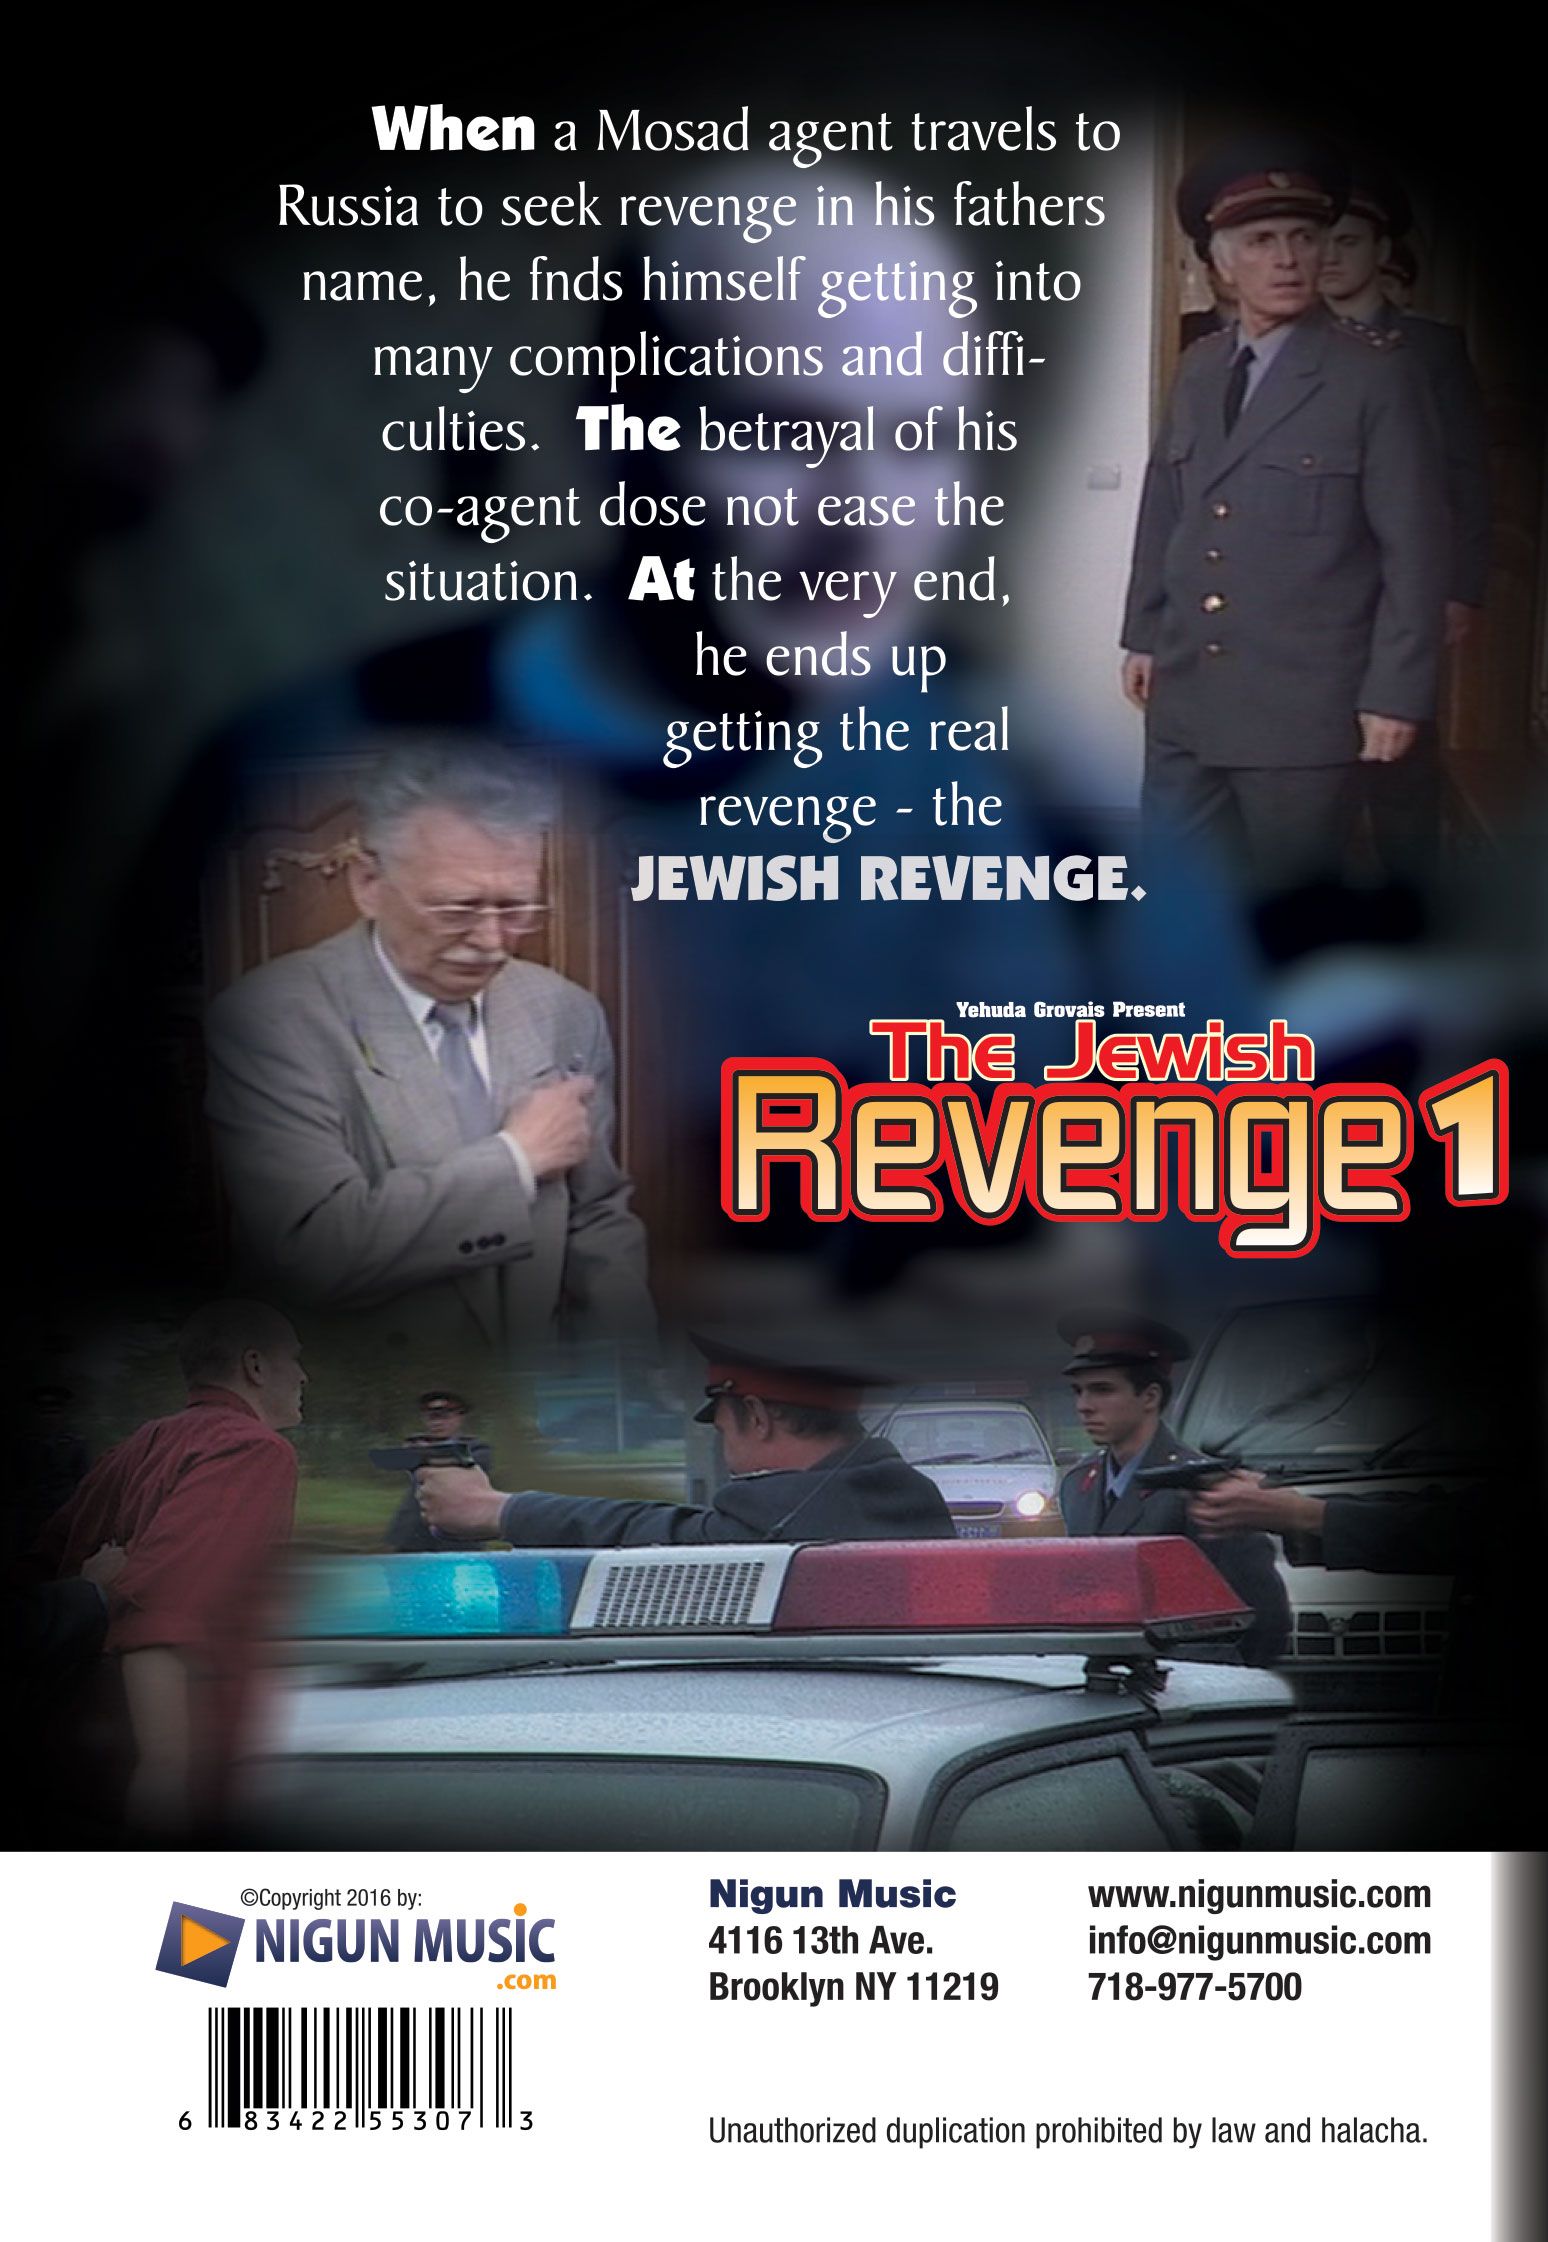 Grovais - The Jewish Revenge 1